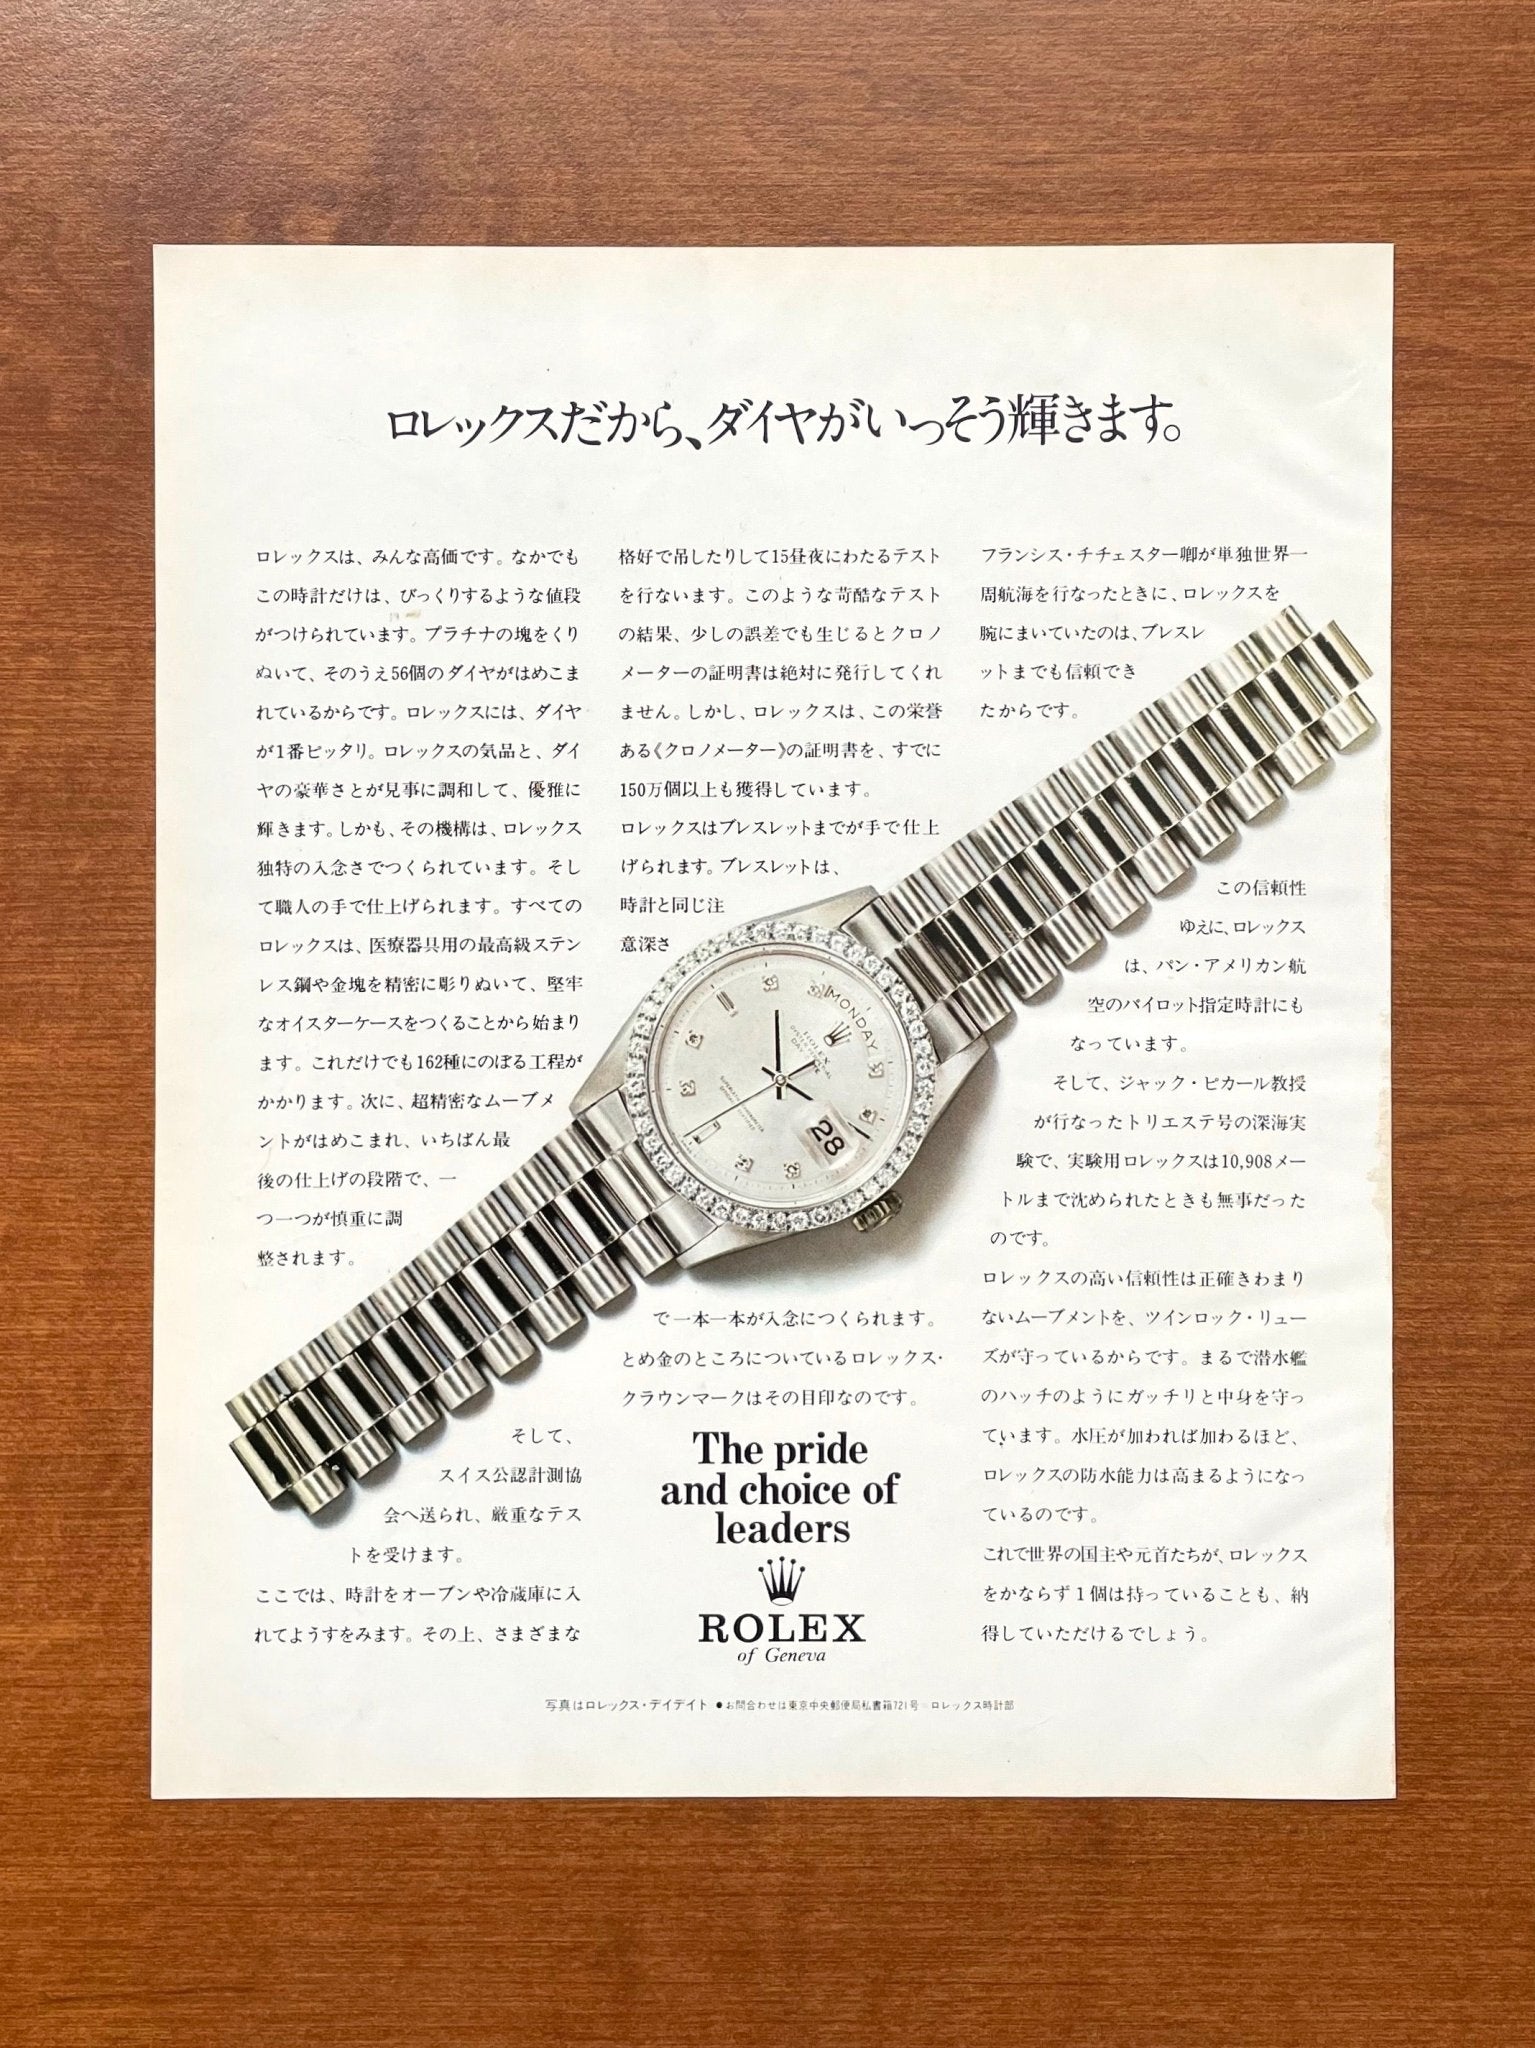 1972 Rolex Platinum Day Date w/ Diamonds in Japanese Advertisement